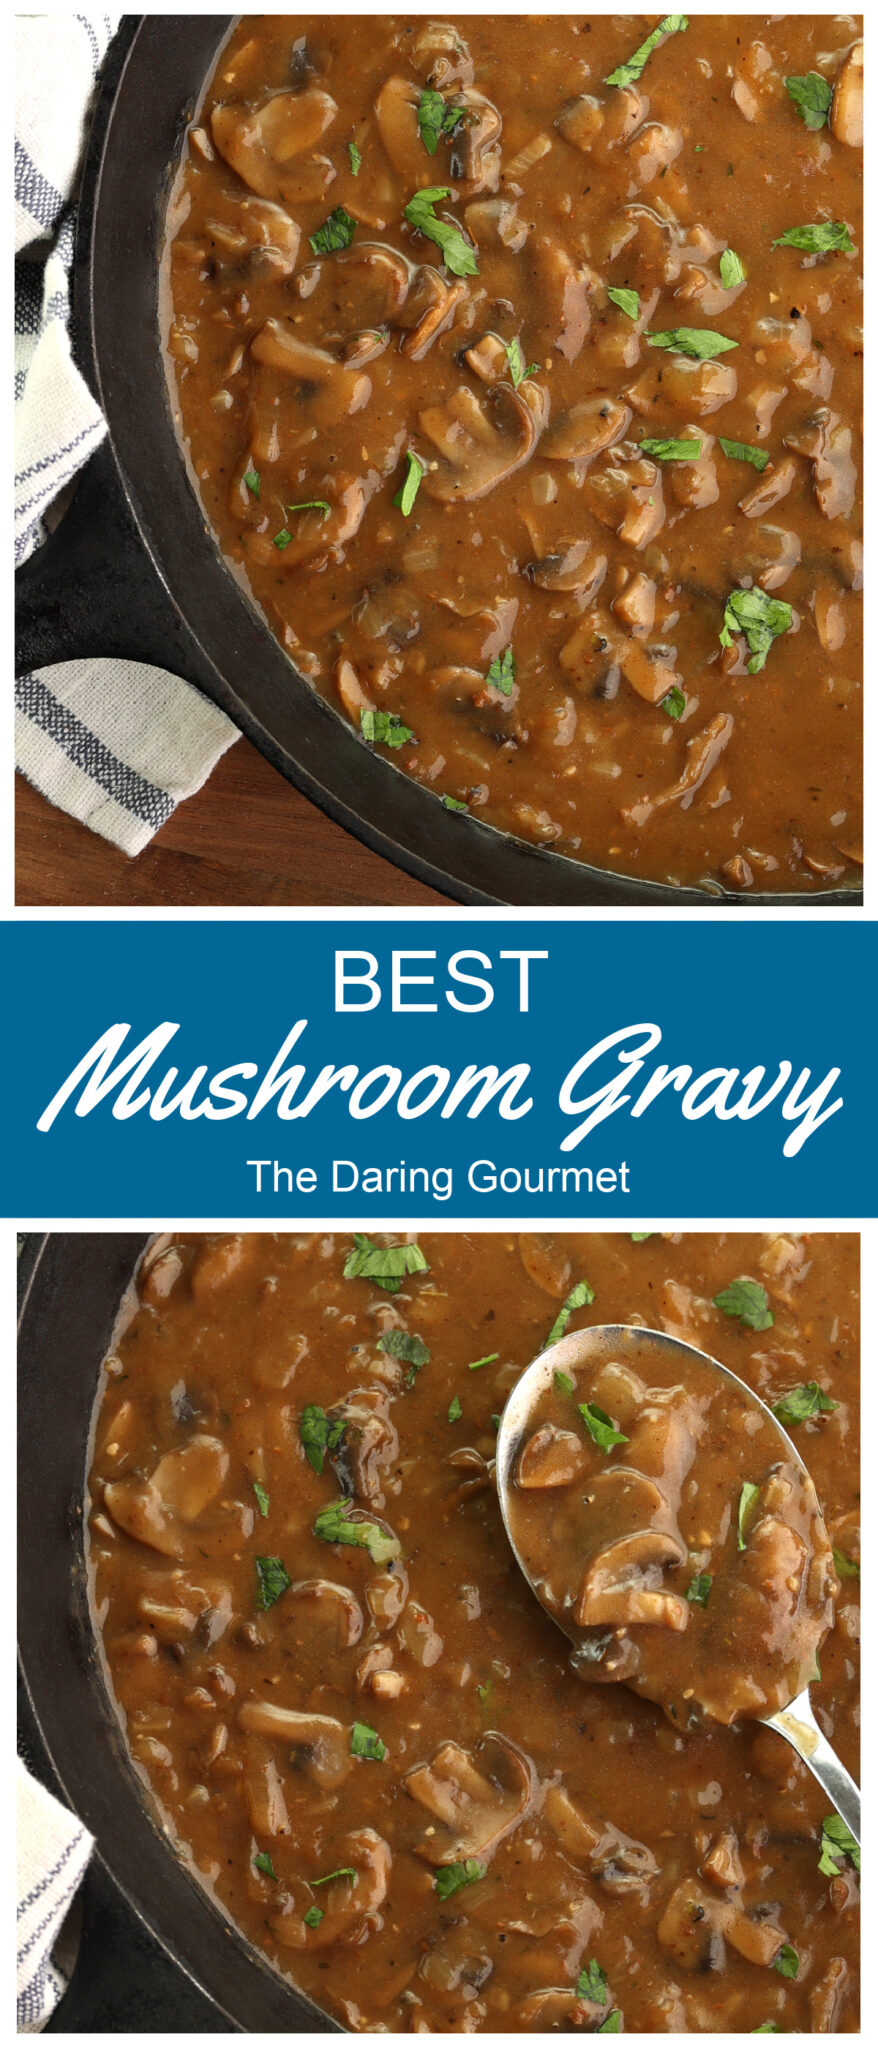 BEST Mushroom Gravy - The Daring Gourmet